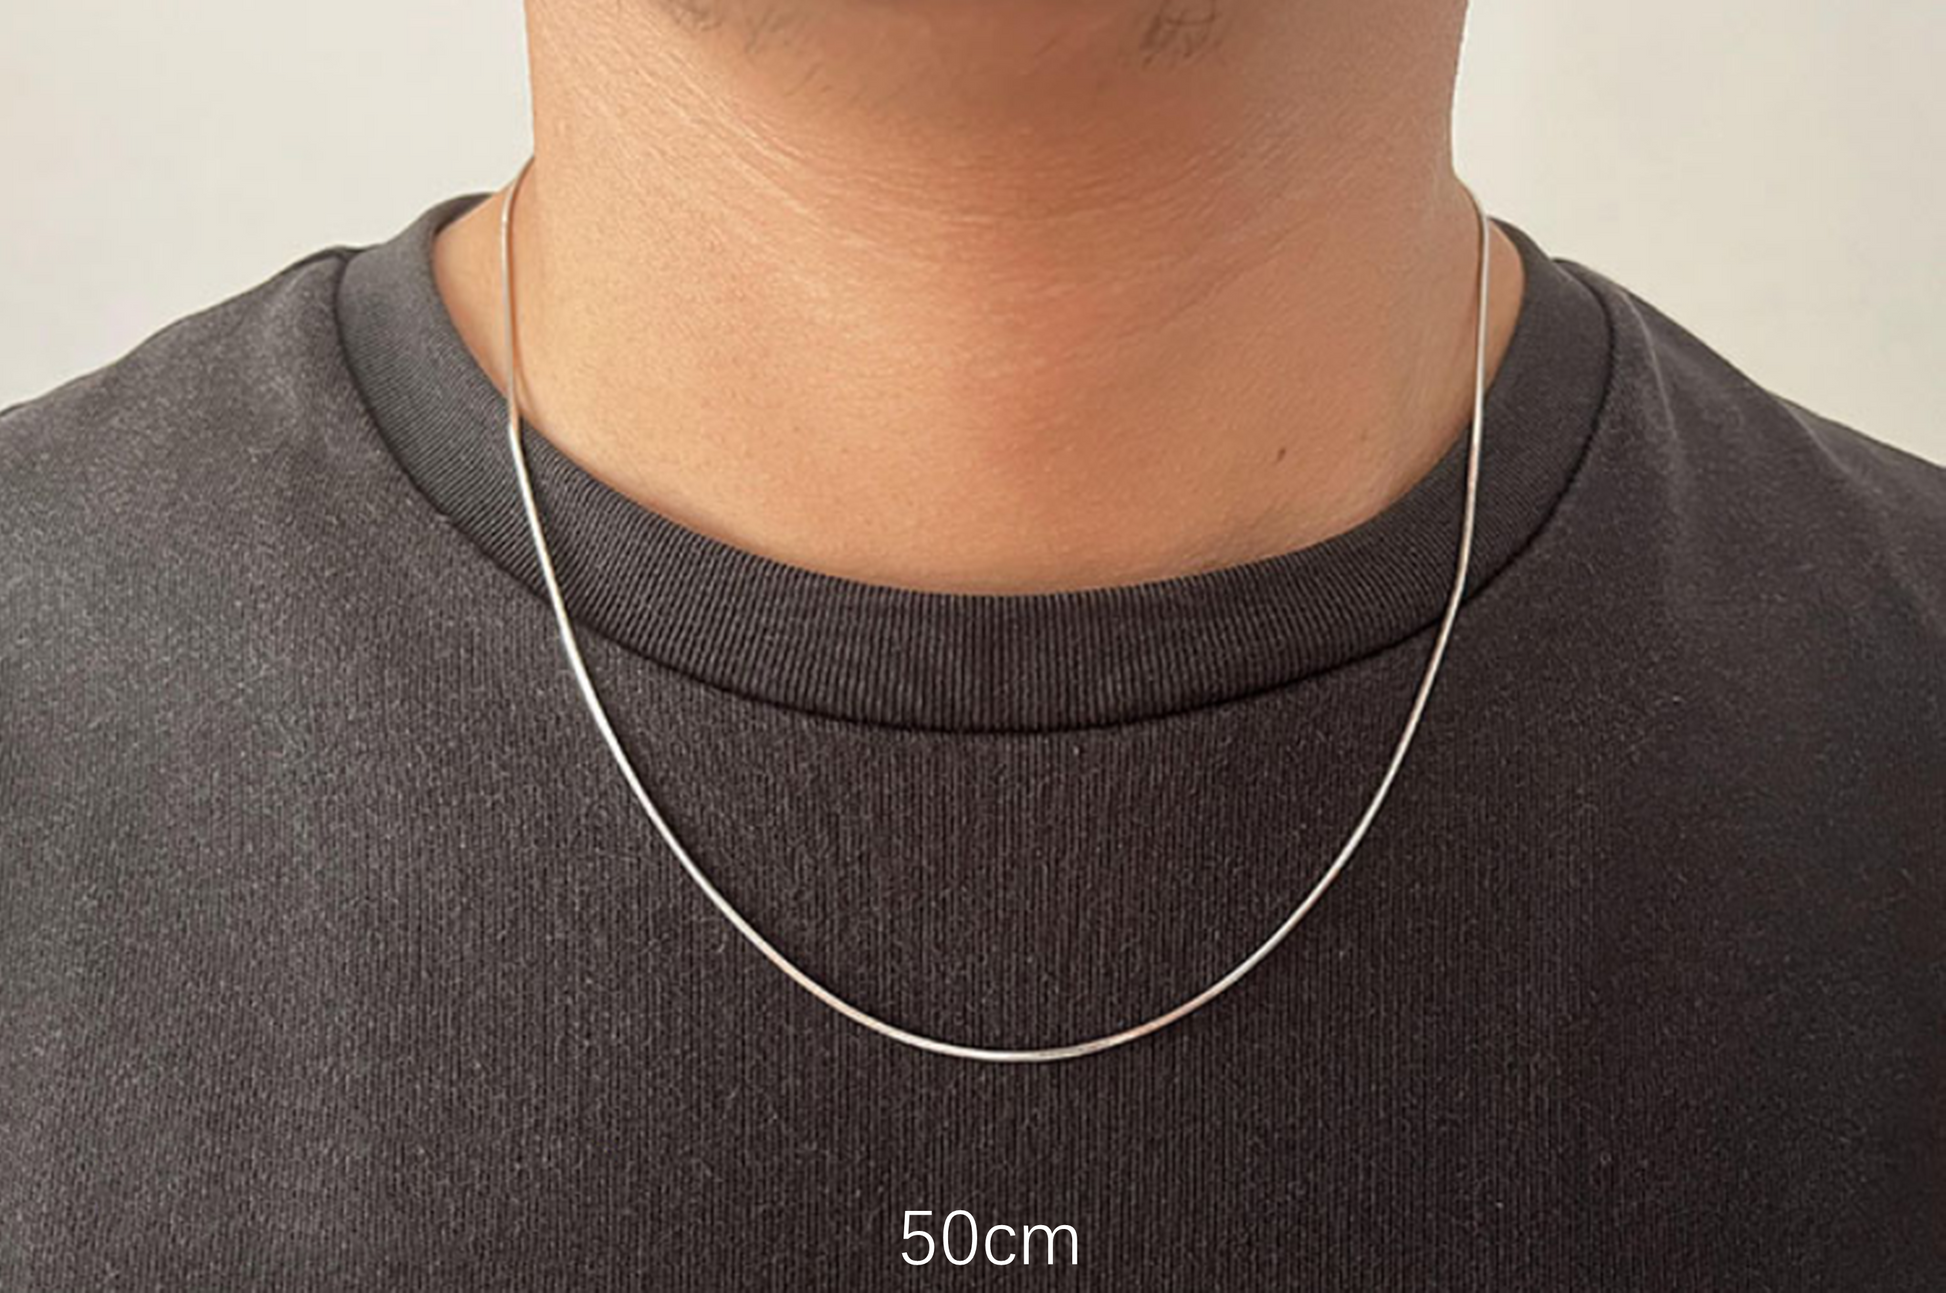 Rhodium on sterling silver chain necklace  0.7mm 1mm Snake Chain 16 - 24'' 40 - 60cm - sugarkittenlondon